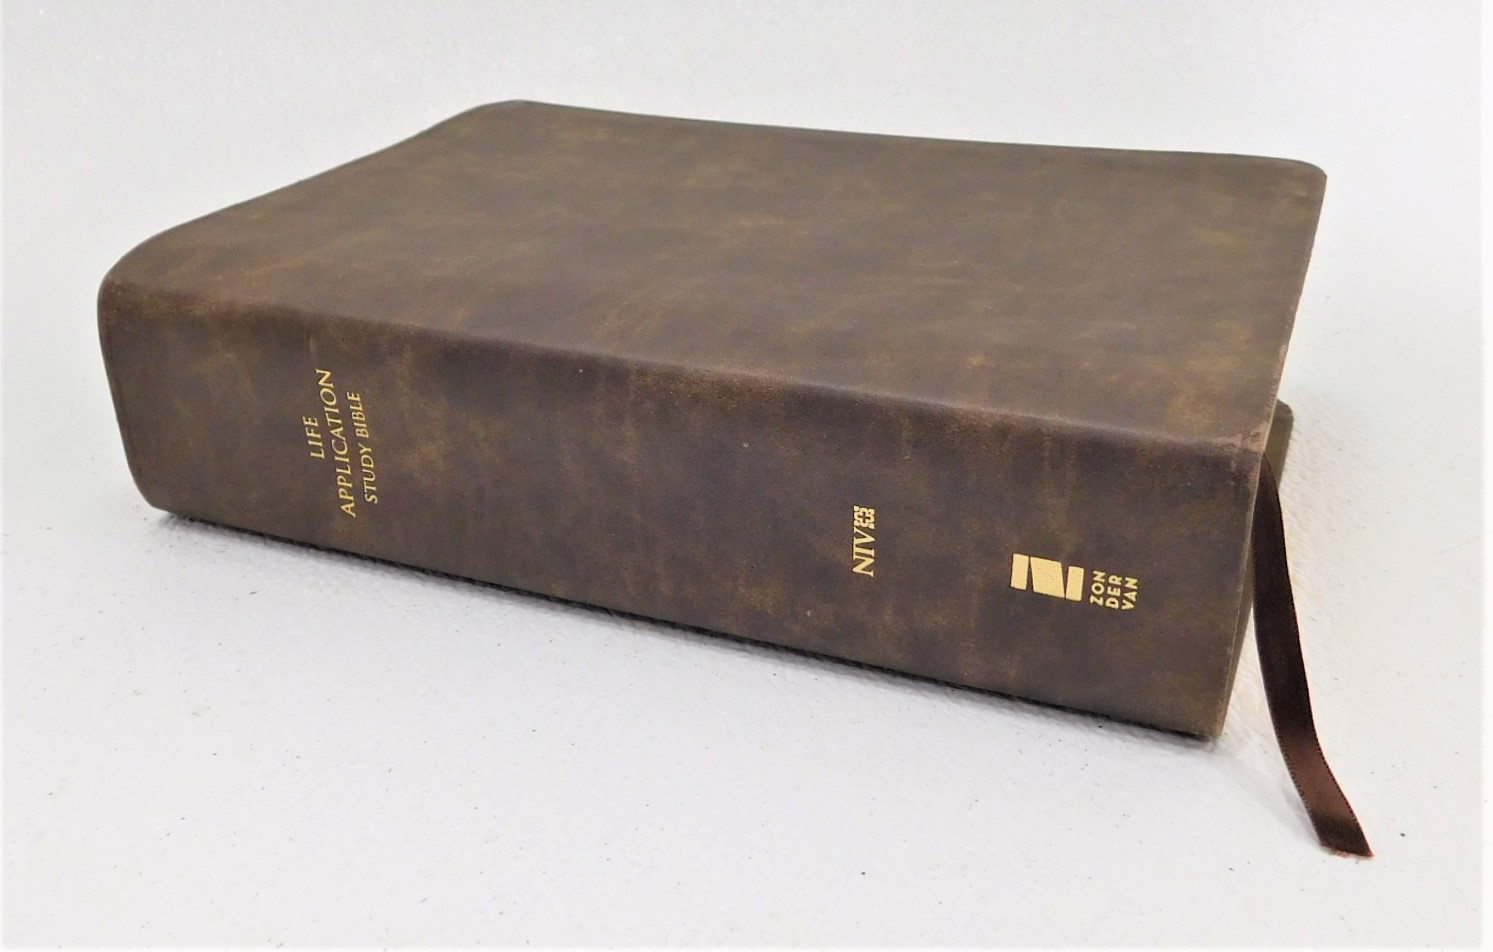 Buy the NIV Large Print Life Application Study Bible Zondervan (Bonded ...